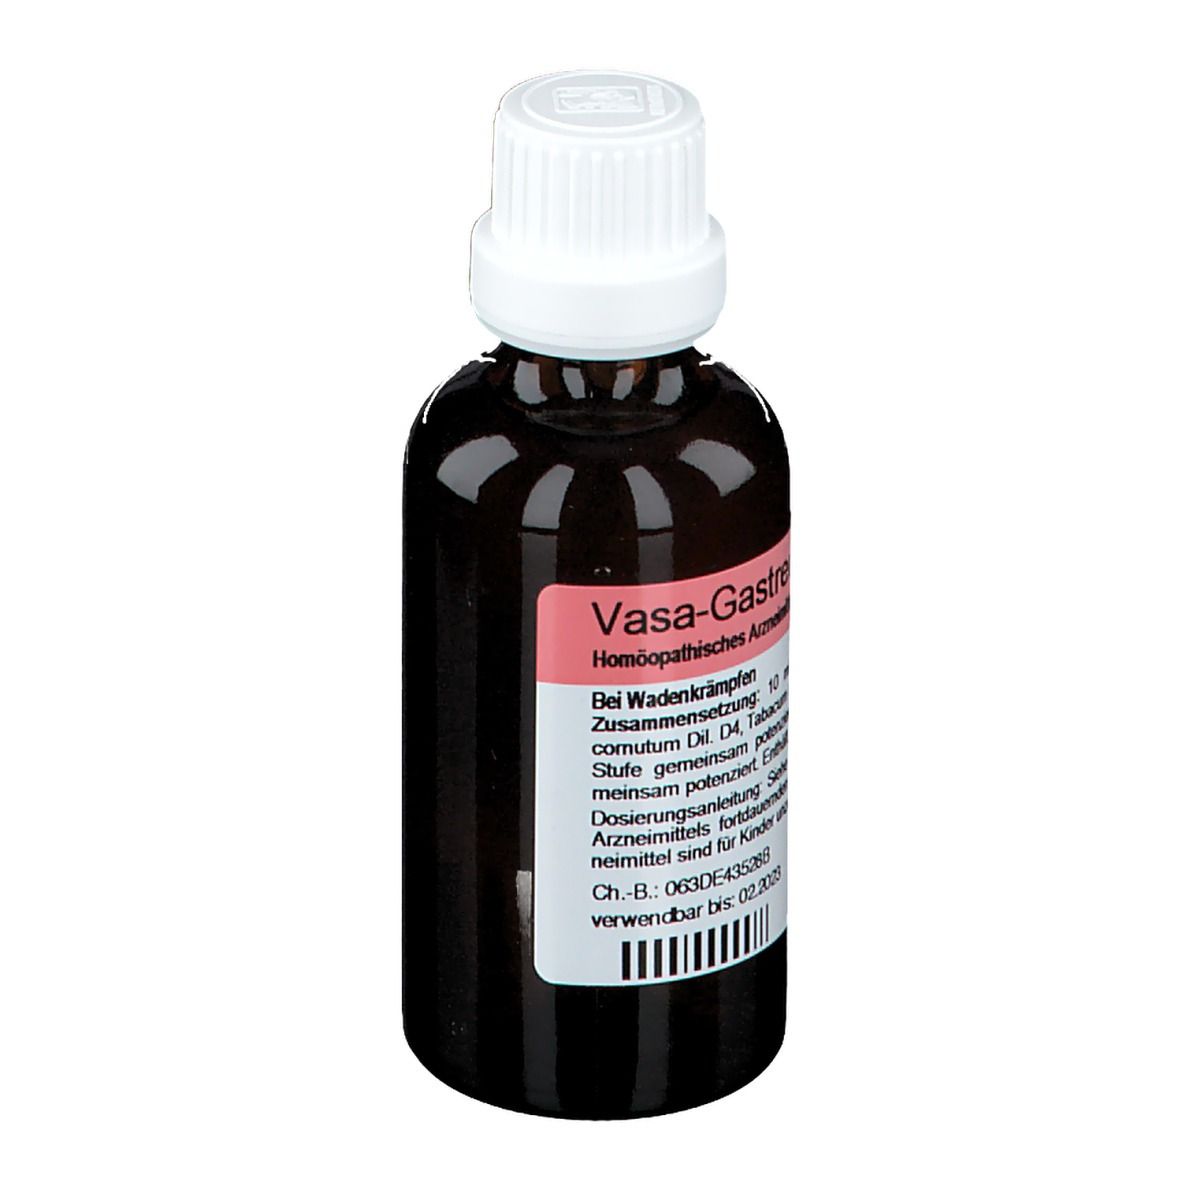 Vasa-Gastreu® N R63 Tropfen